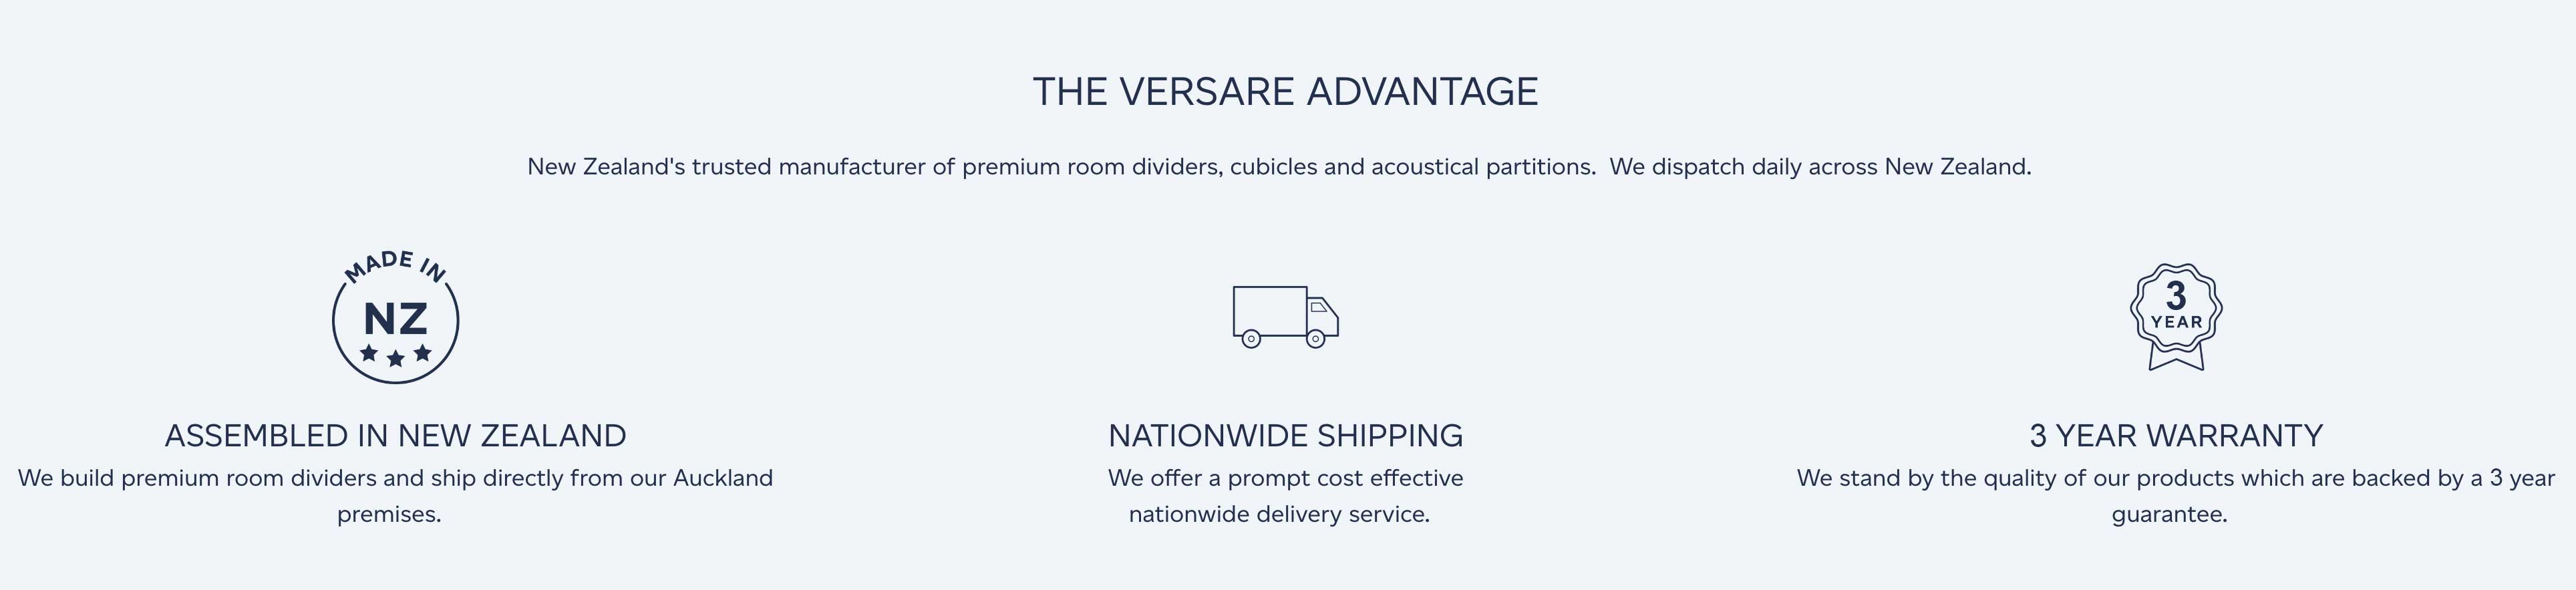 versare-advantage-3-year-warranty.jpg